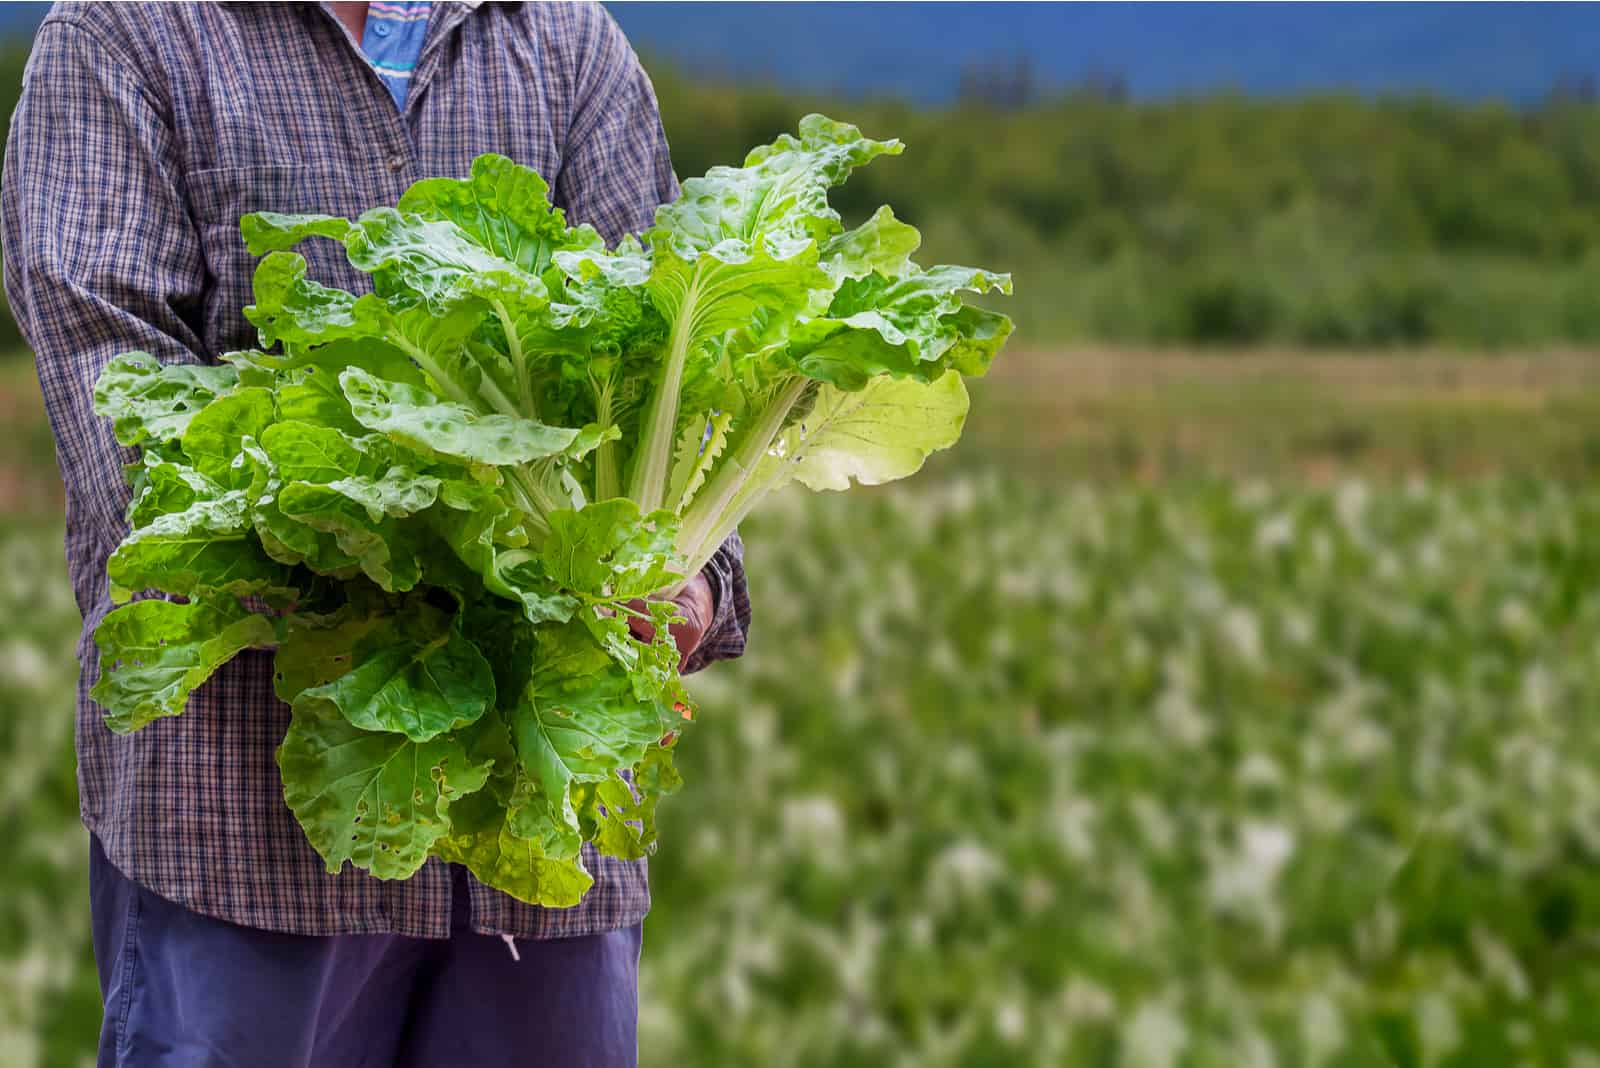 woman holding lettuce